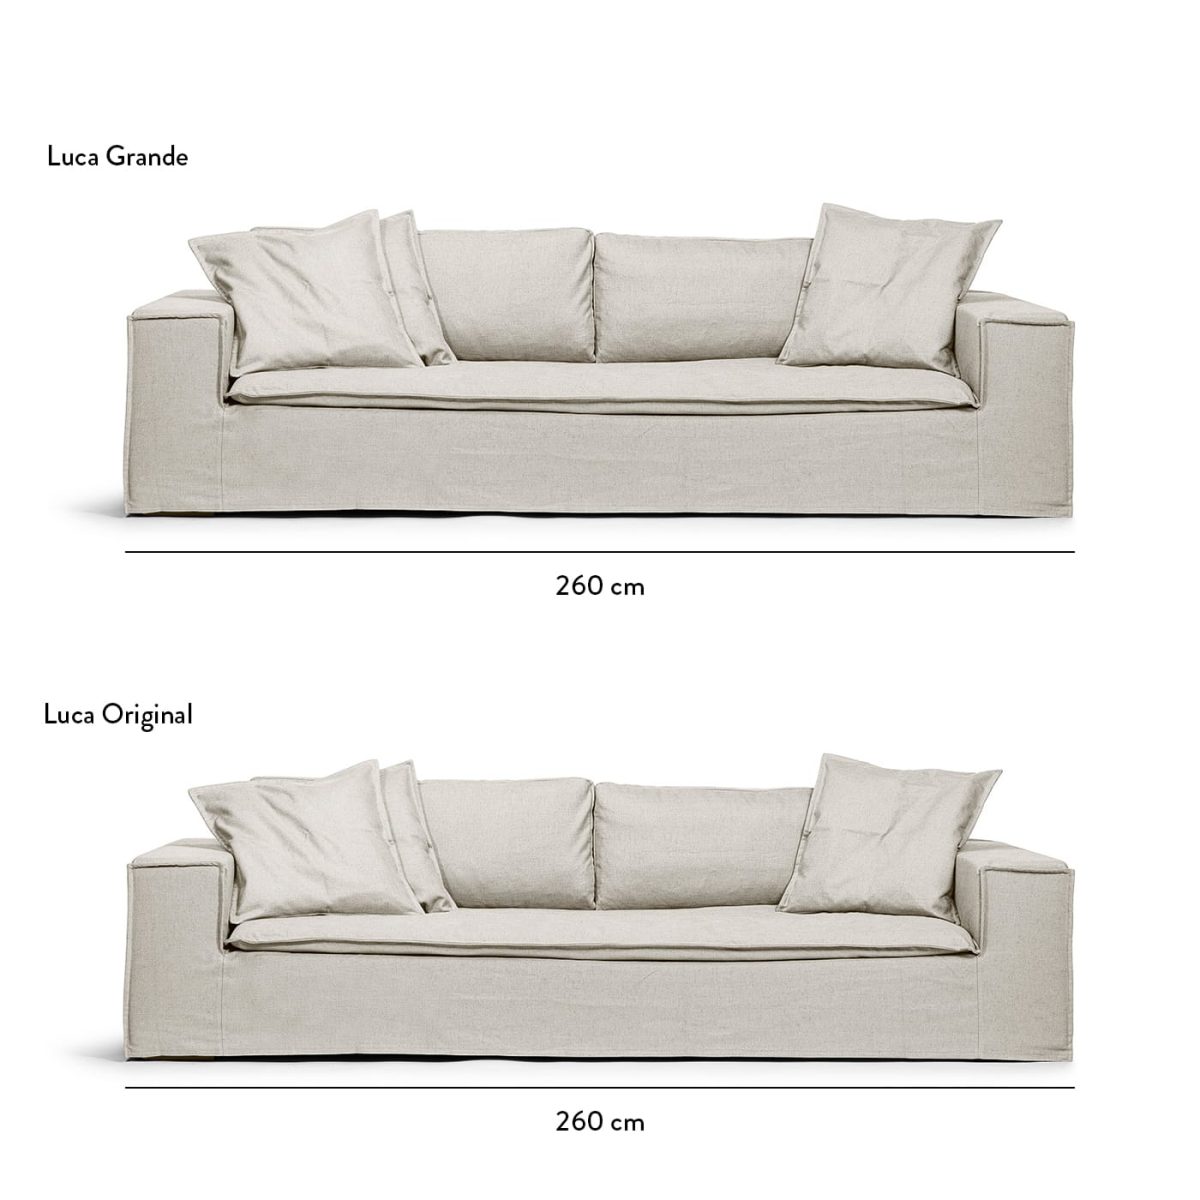 Luca Grande 3-seater sofa Deep Blue